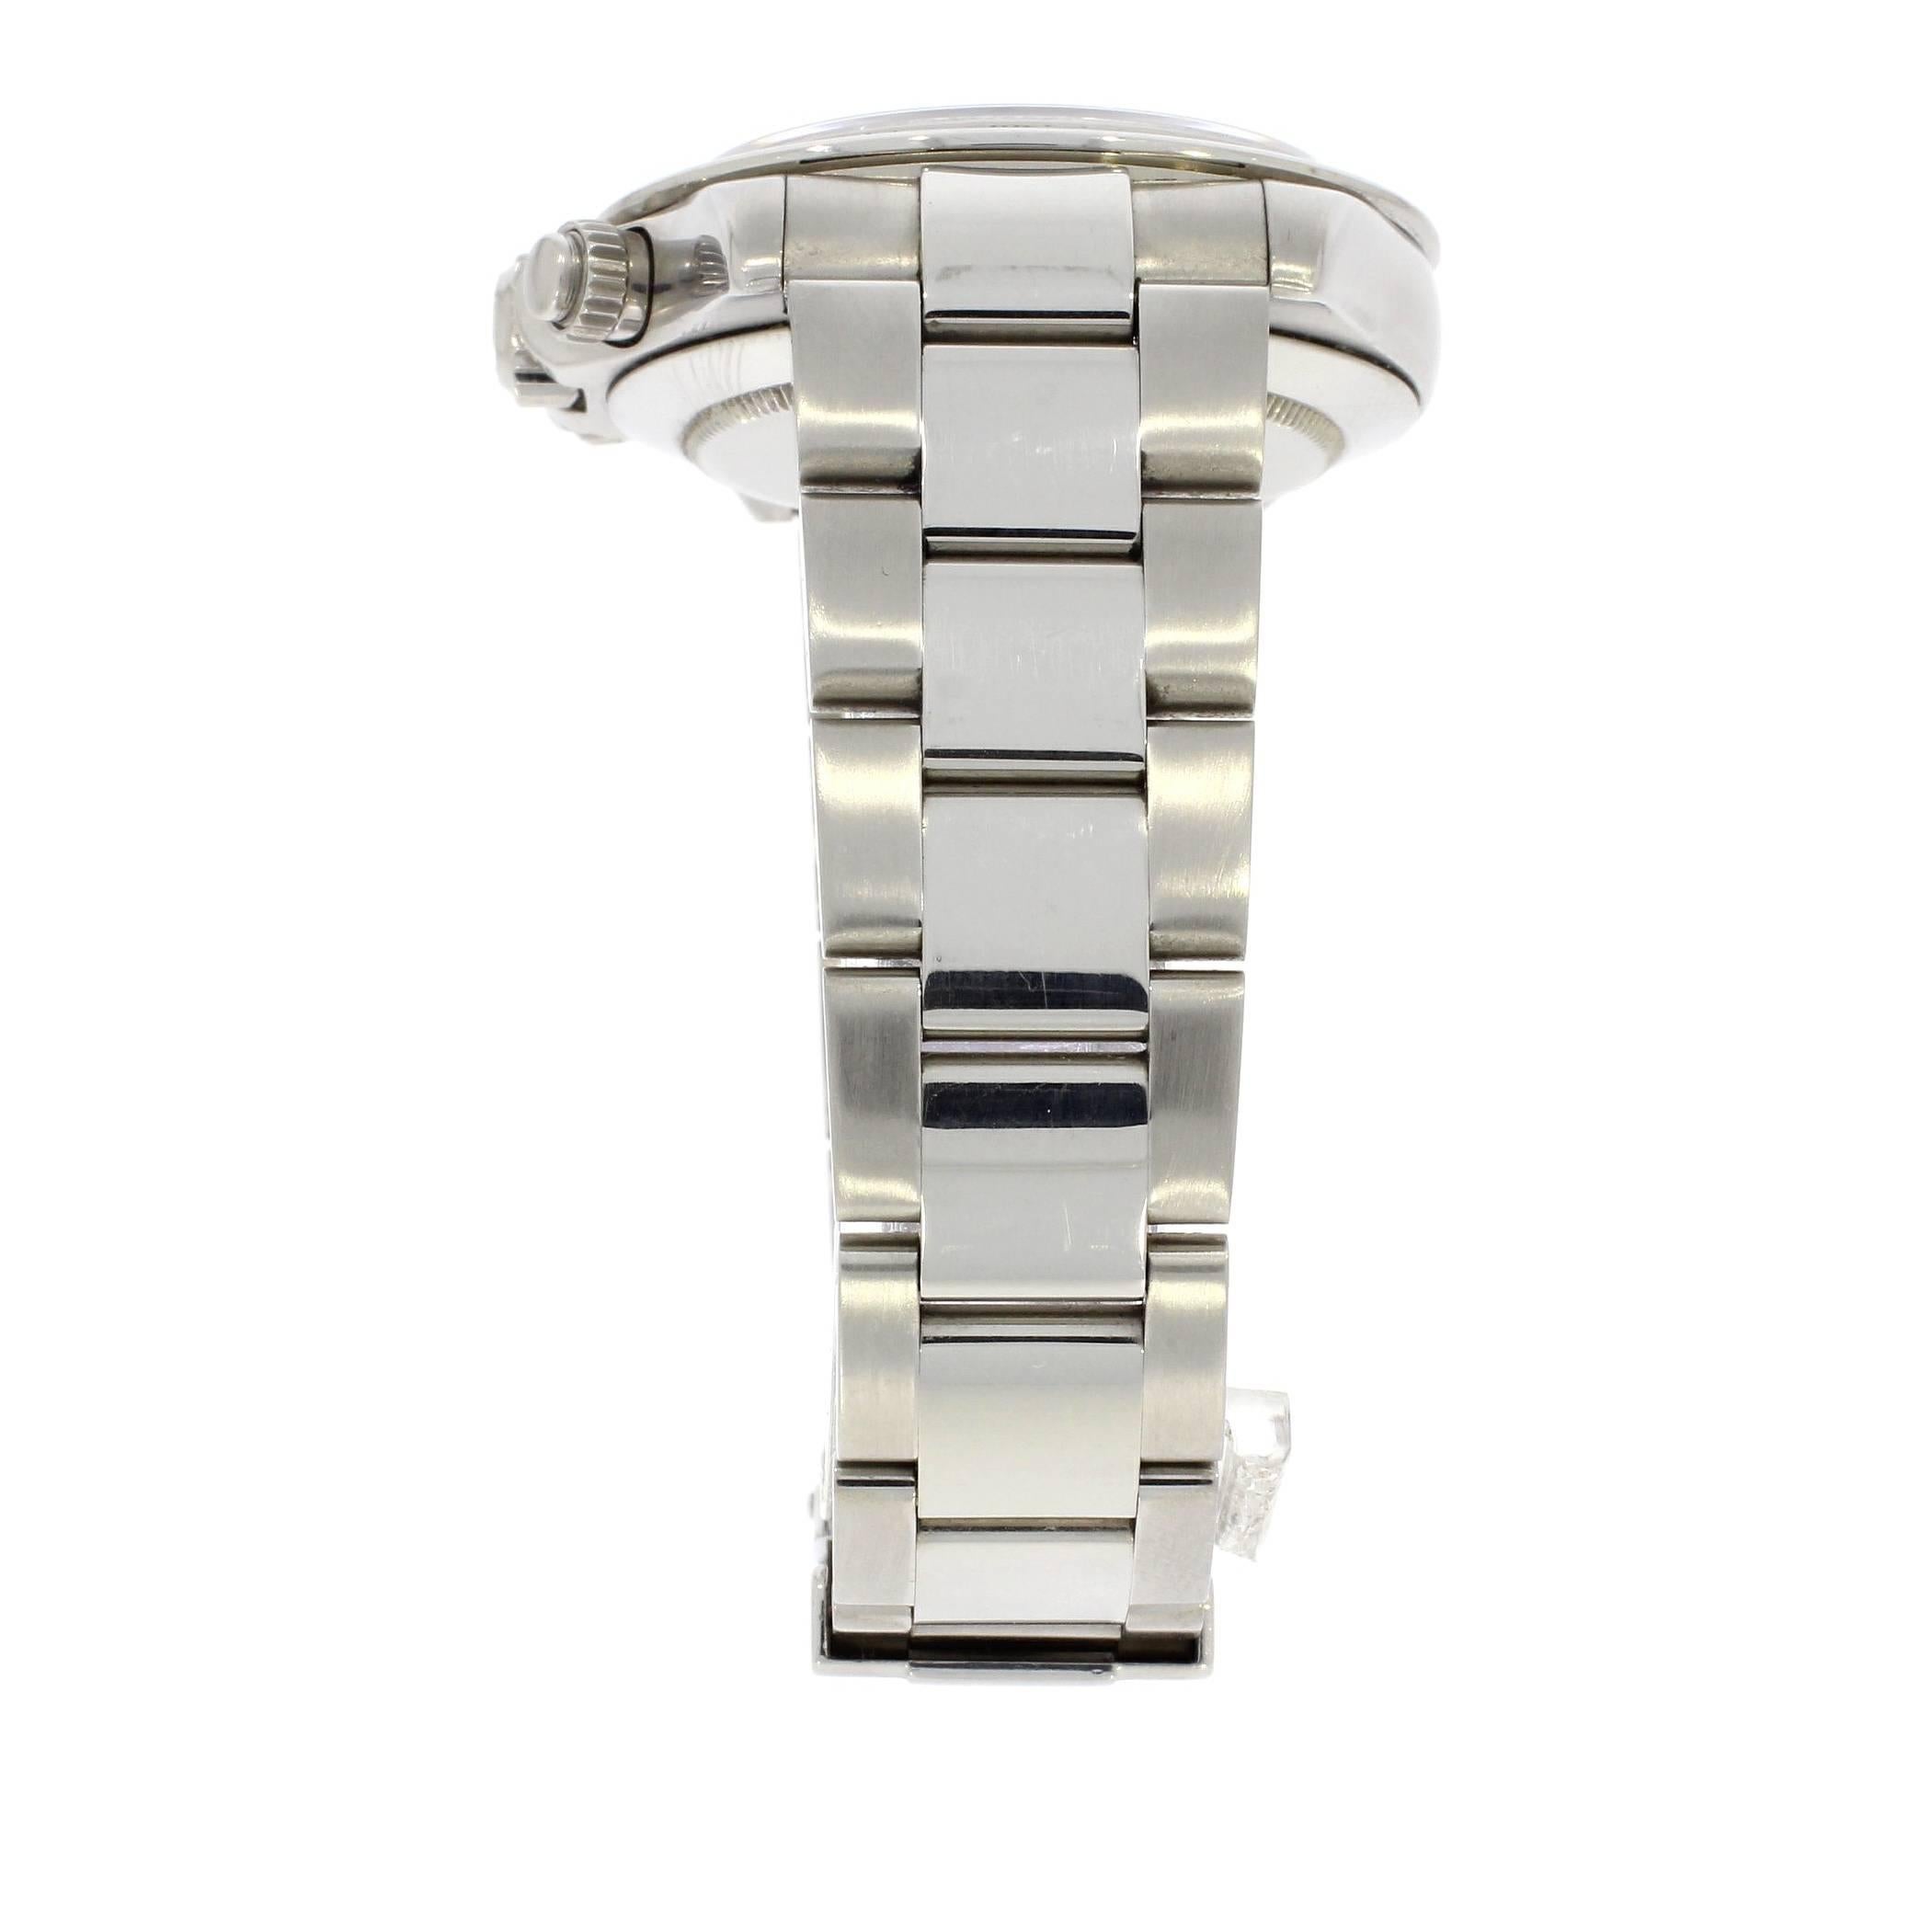 Rolex Daytona Stainless Steel Chronograph 116520 Automatic Wrist Watch 2